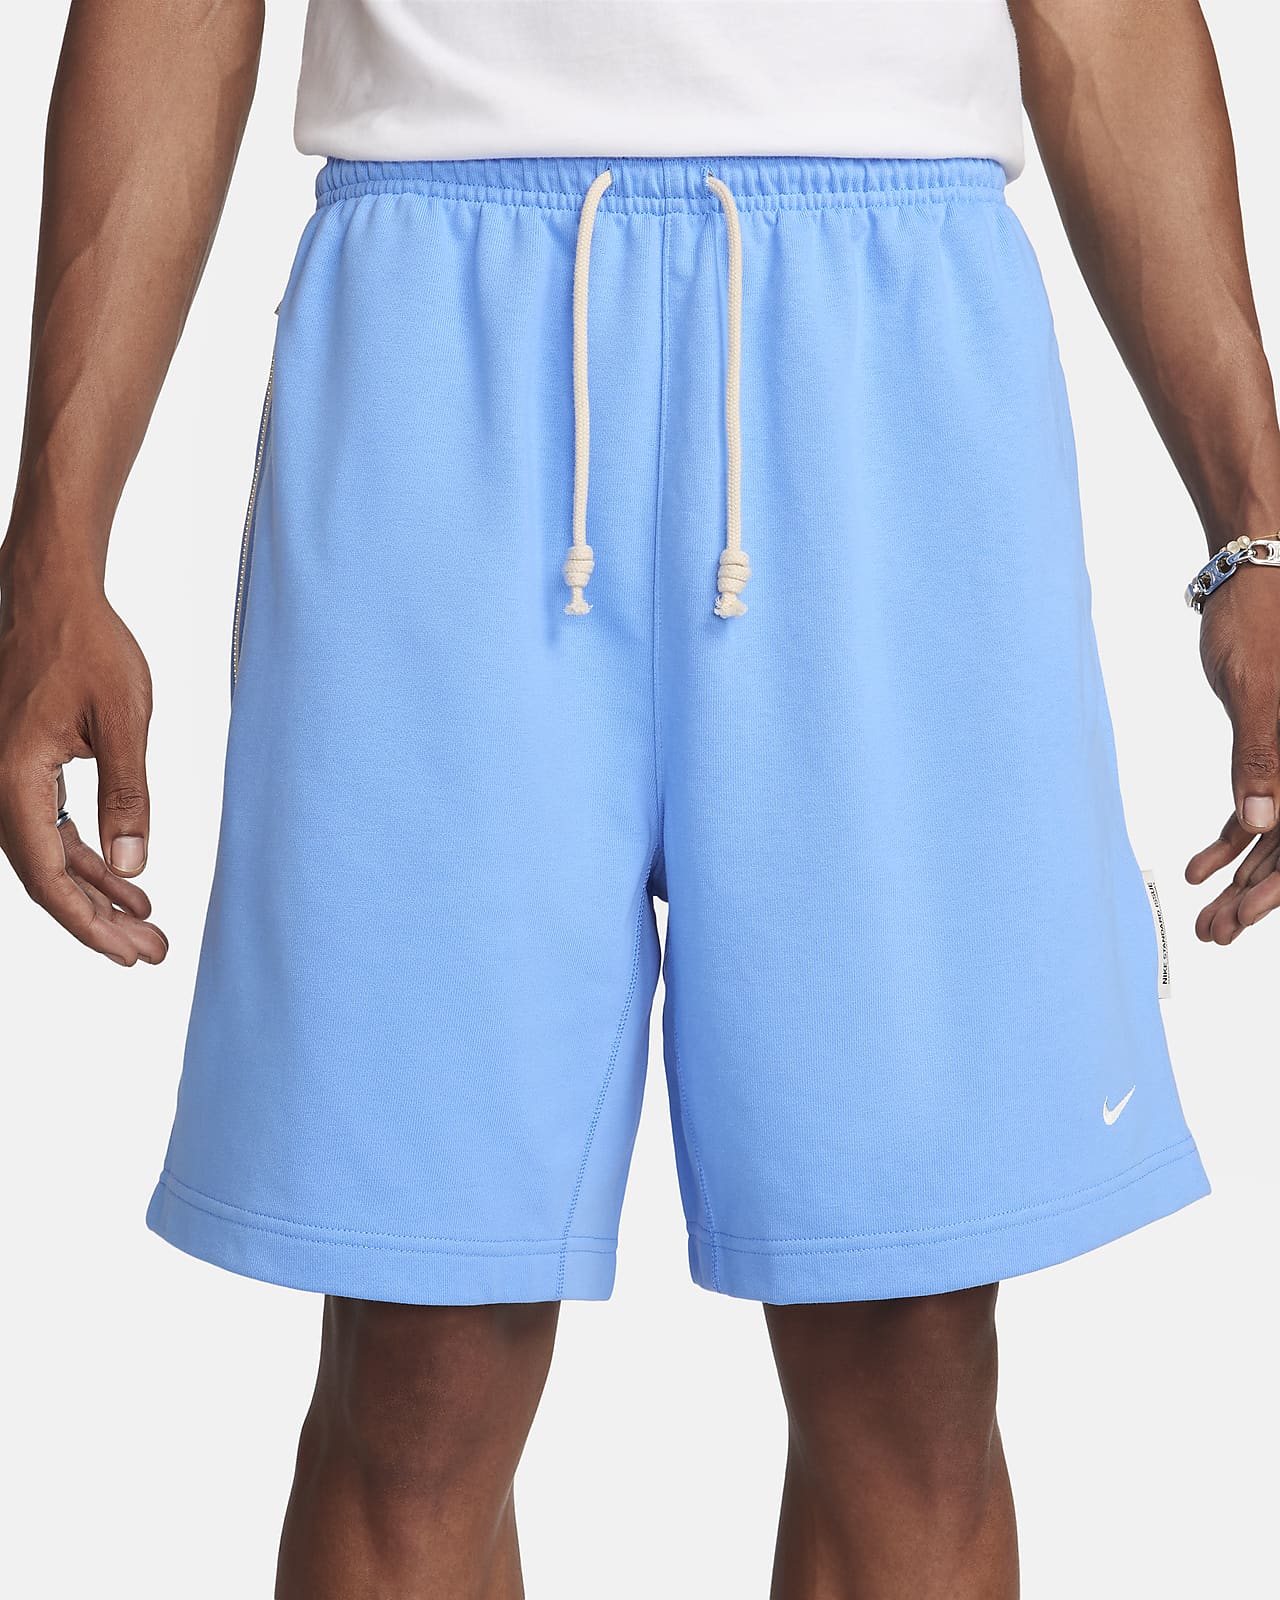 Custom Design Basketball Wear Shorts Sets Classic Sky Blue